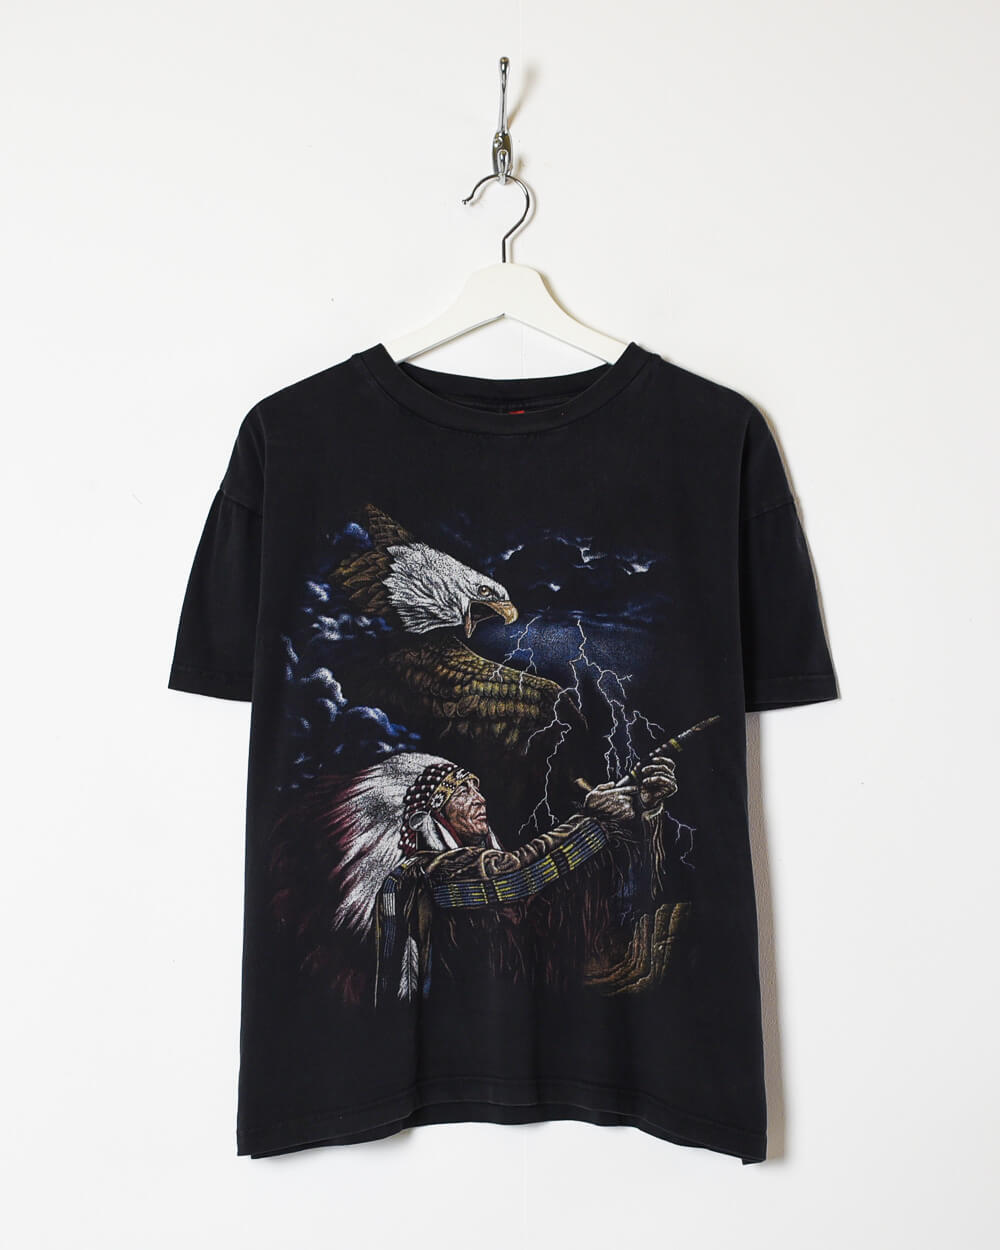 Black Thunder Graphic T-Shirt - Small